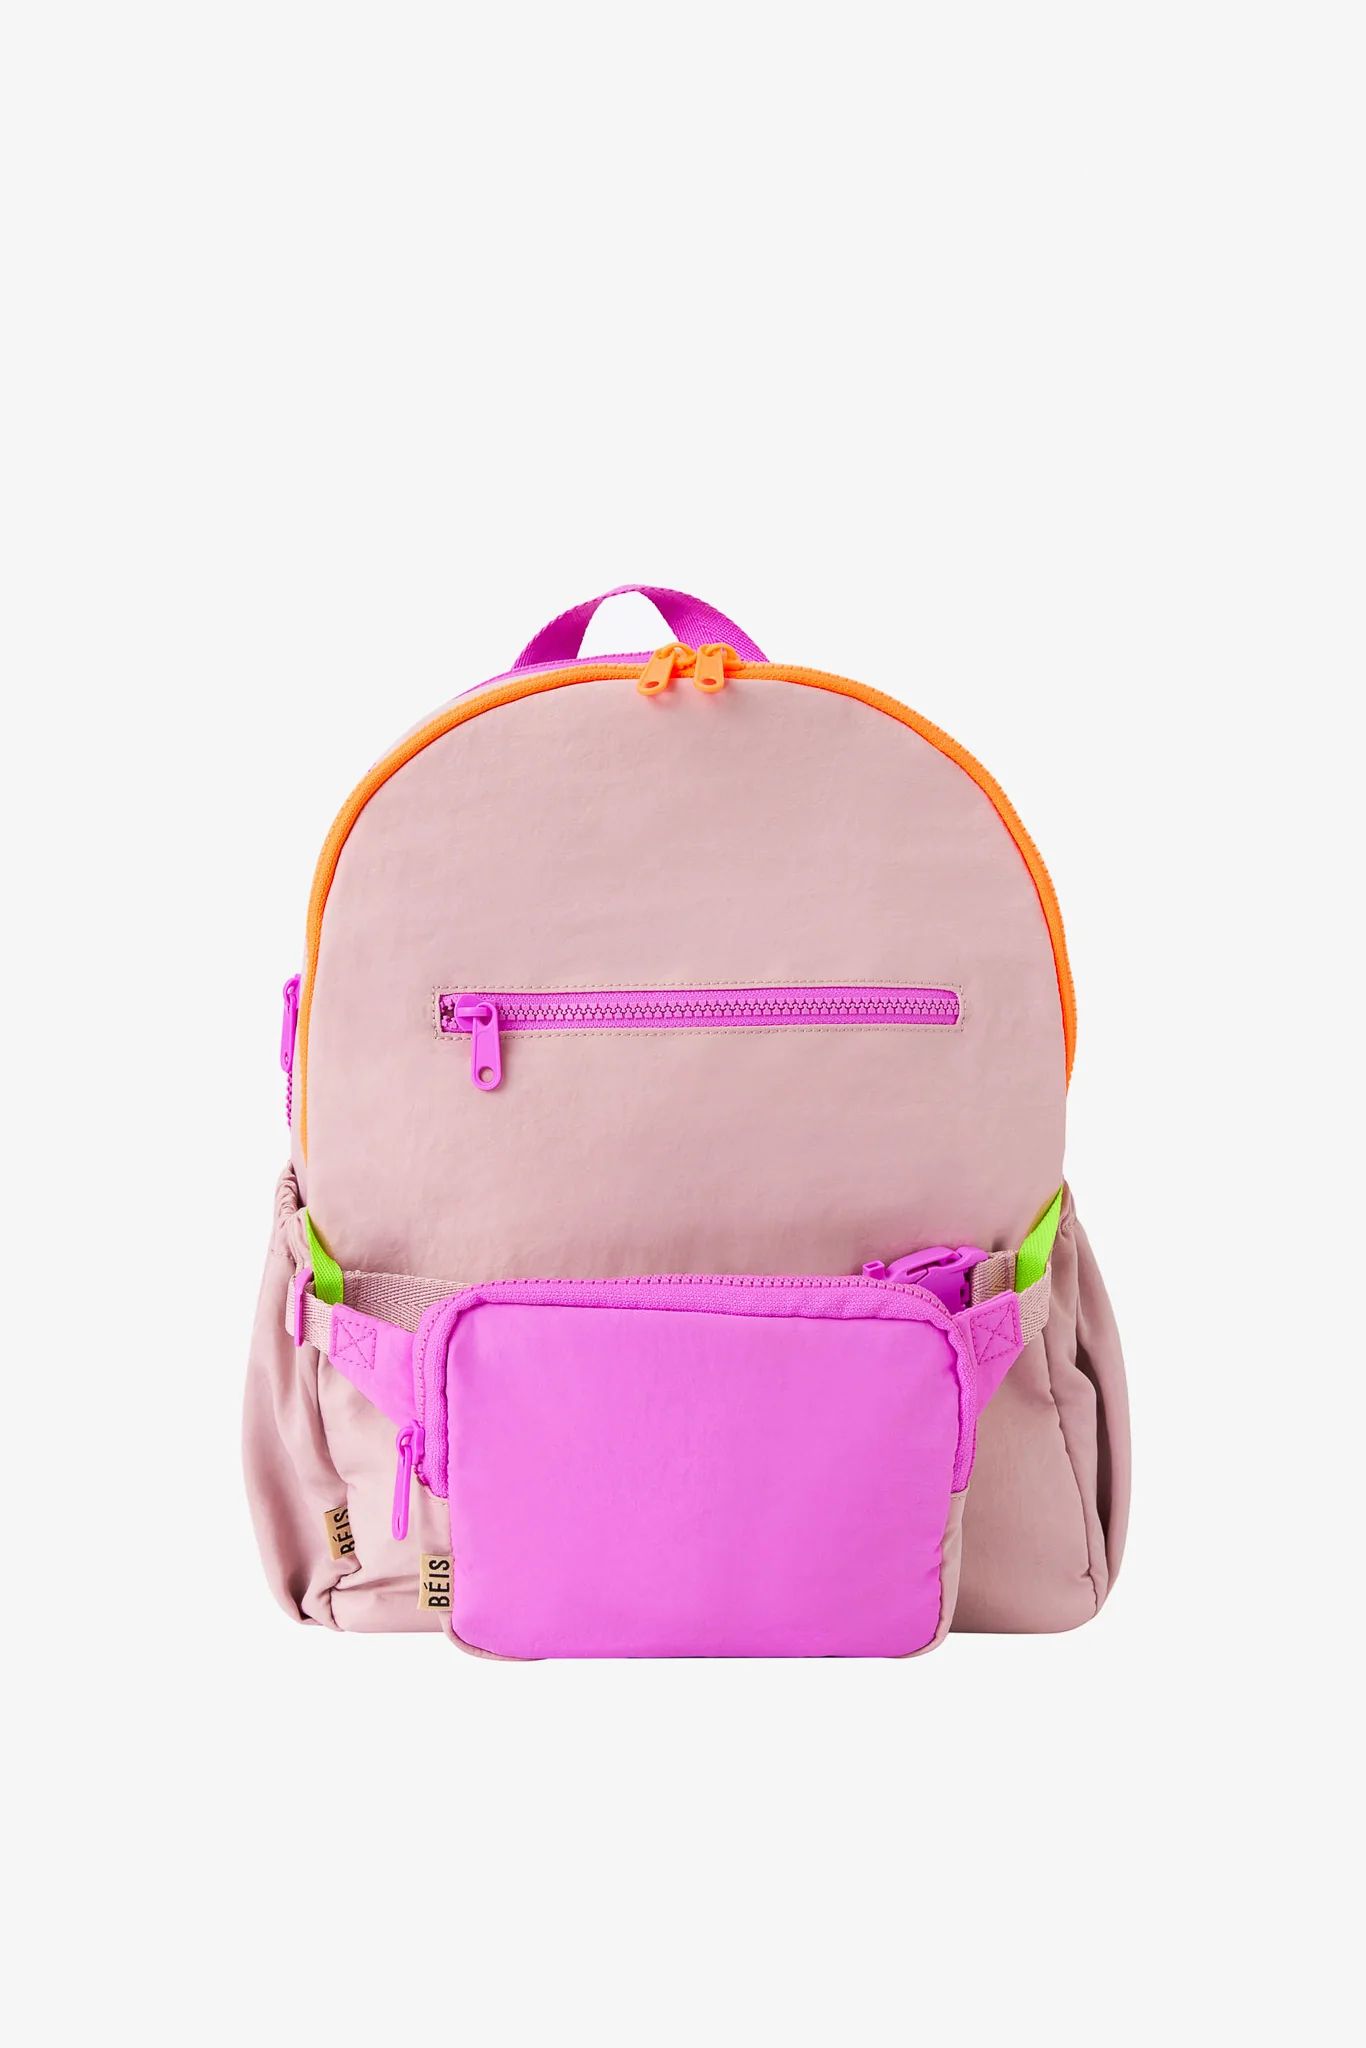 The Kids Backpack in Atlas Pink | BÉIS Travel